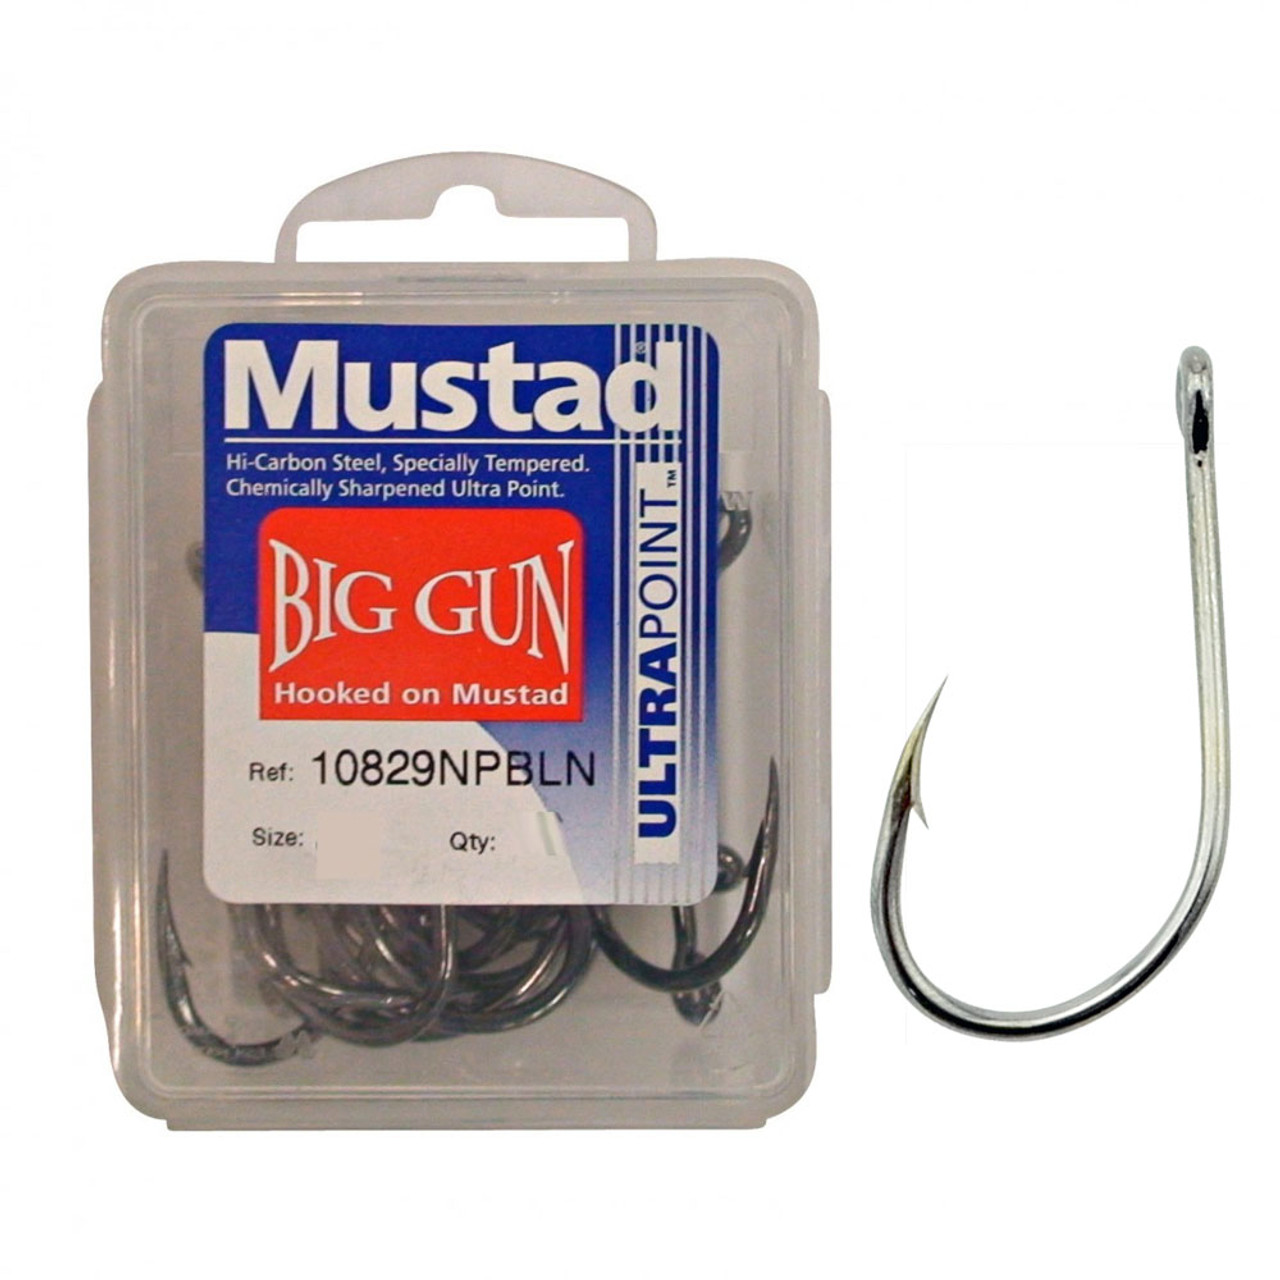 Mustad Big Gun Fishing Hooks - 25 Hooks Box